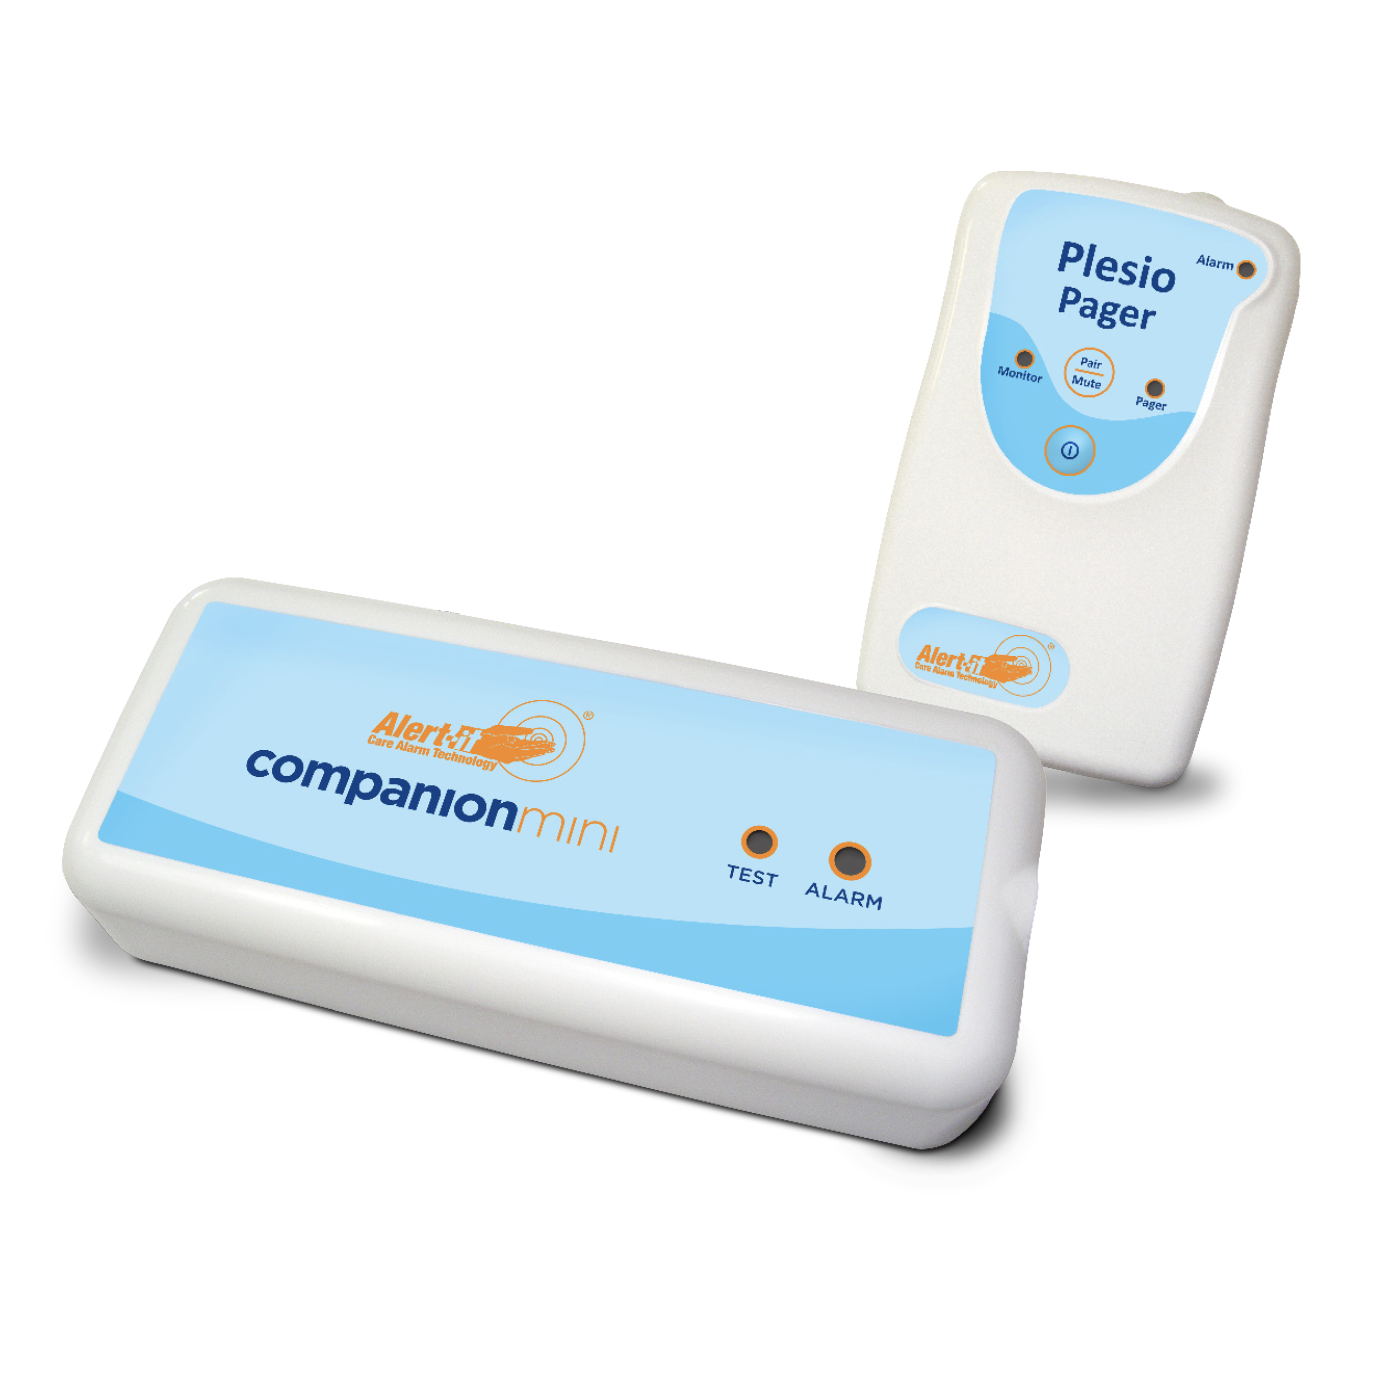 Companion Mini – Includes Plesio Pager – Epilepsy Monitor & Alarm – Digital Movement Sensor – Alert-iT Care Alarms